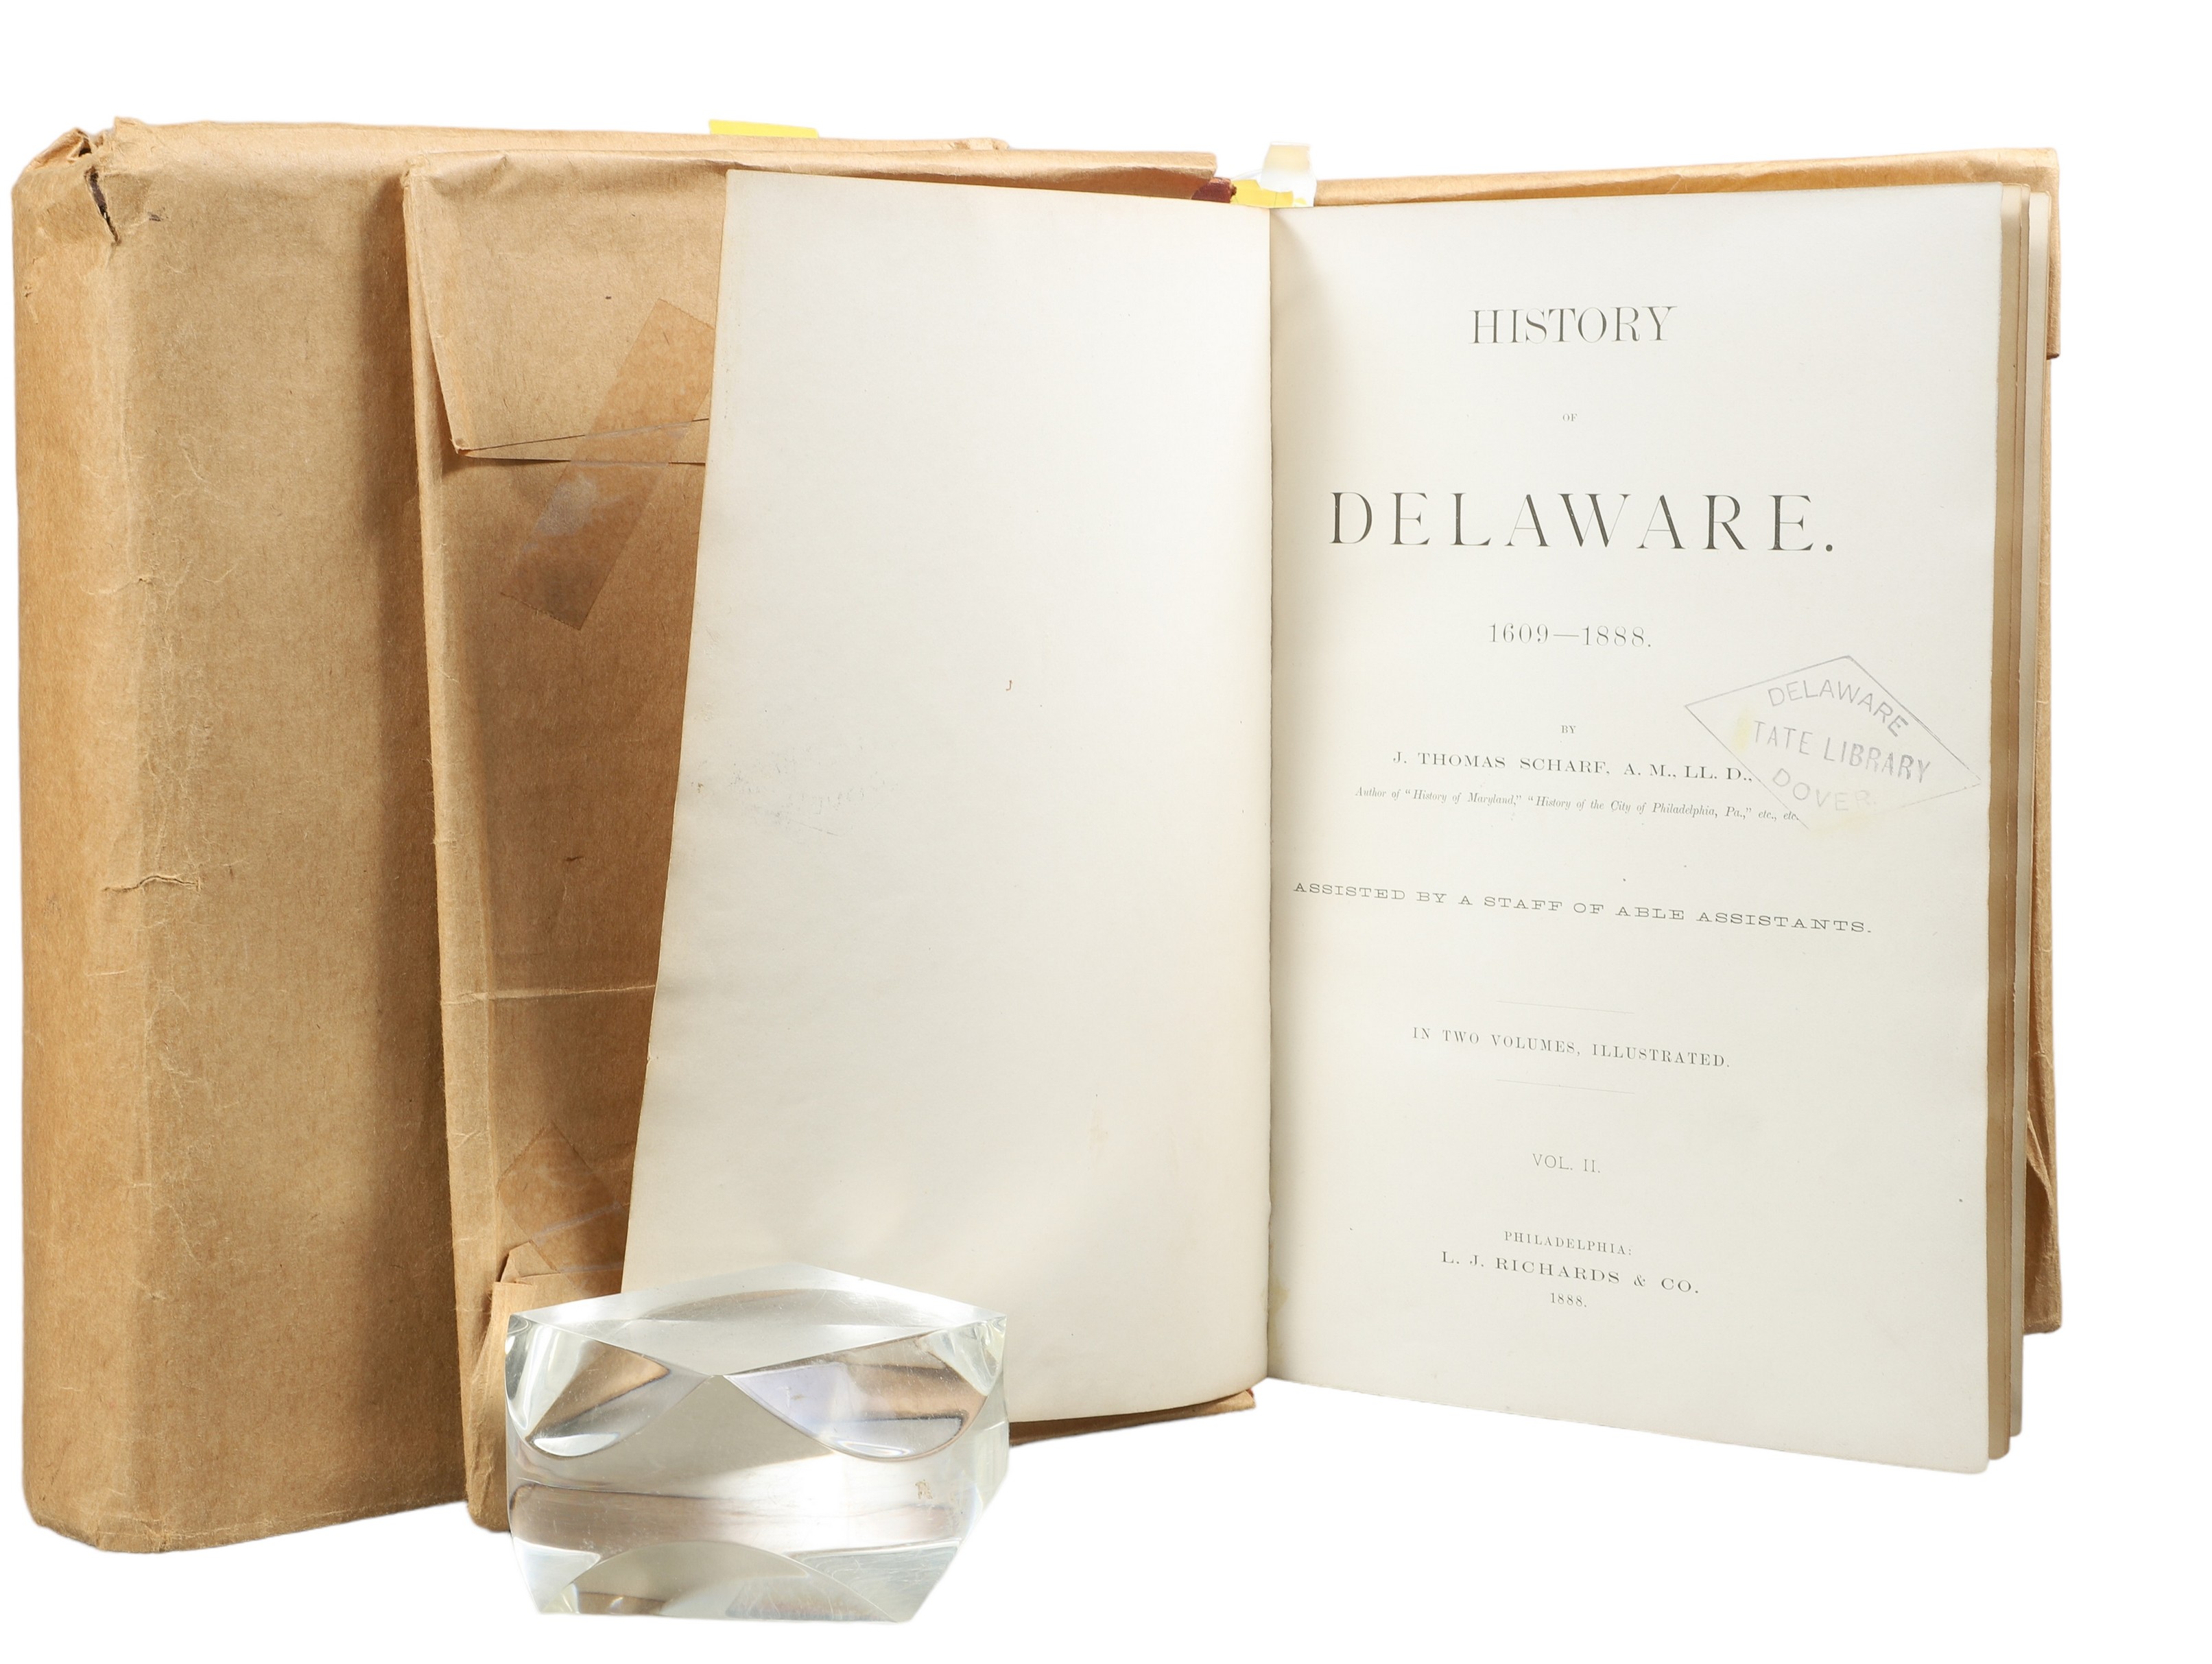 History of Delaware by J Thomas 2e13a5